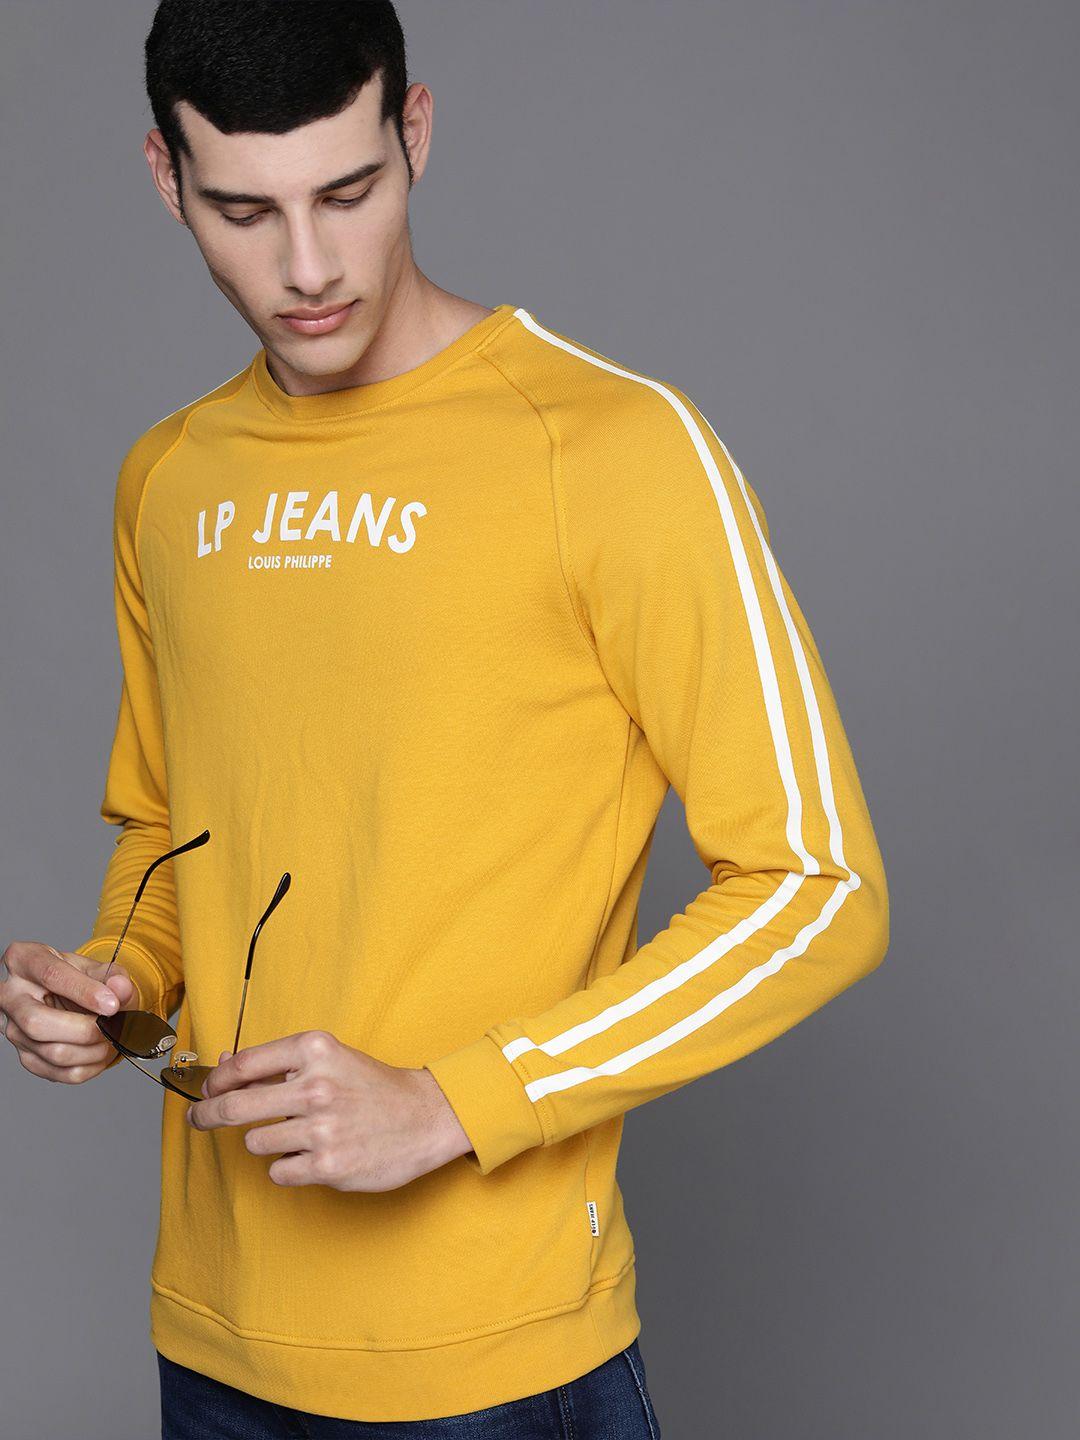 louis-philippe-jeans-men-yellow-&-white-brand-logo-printed-round-neck-sweatshirt